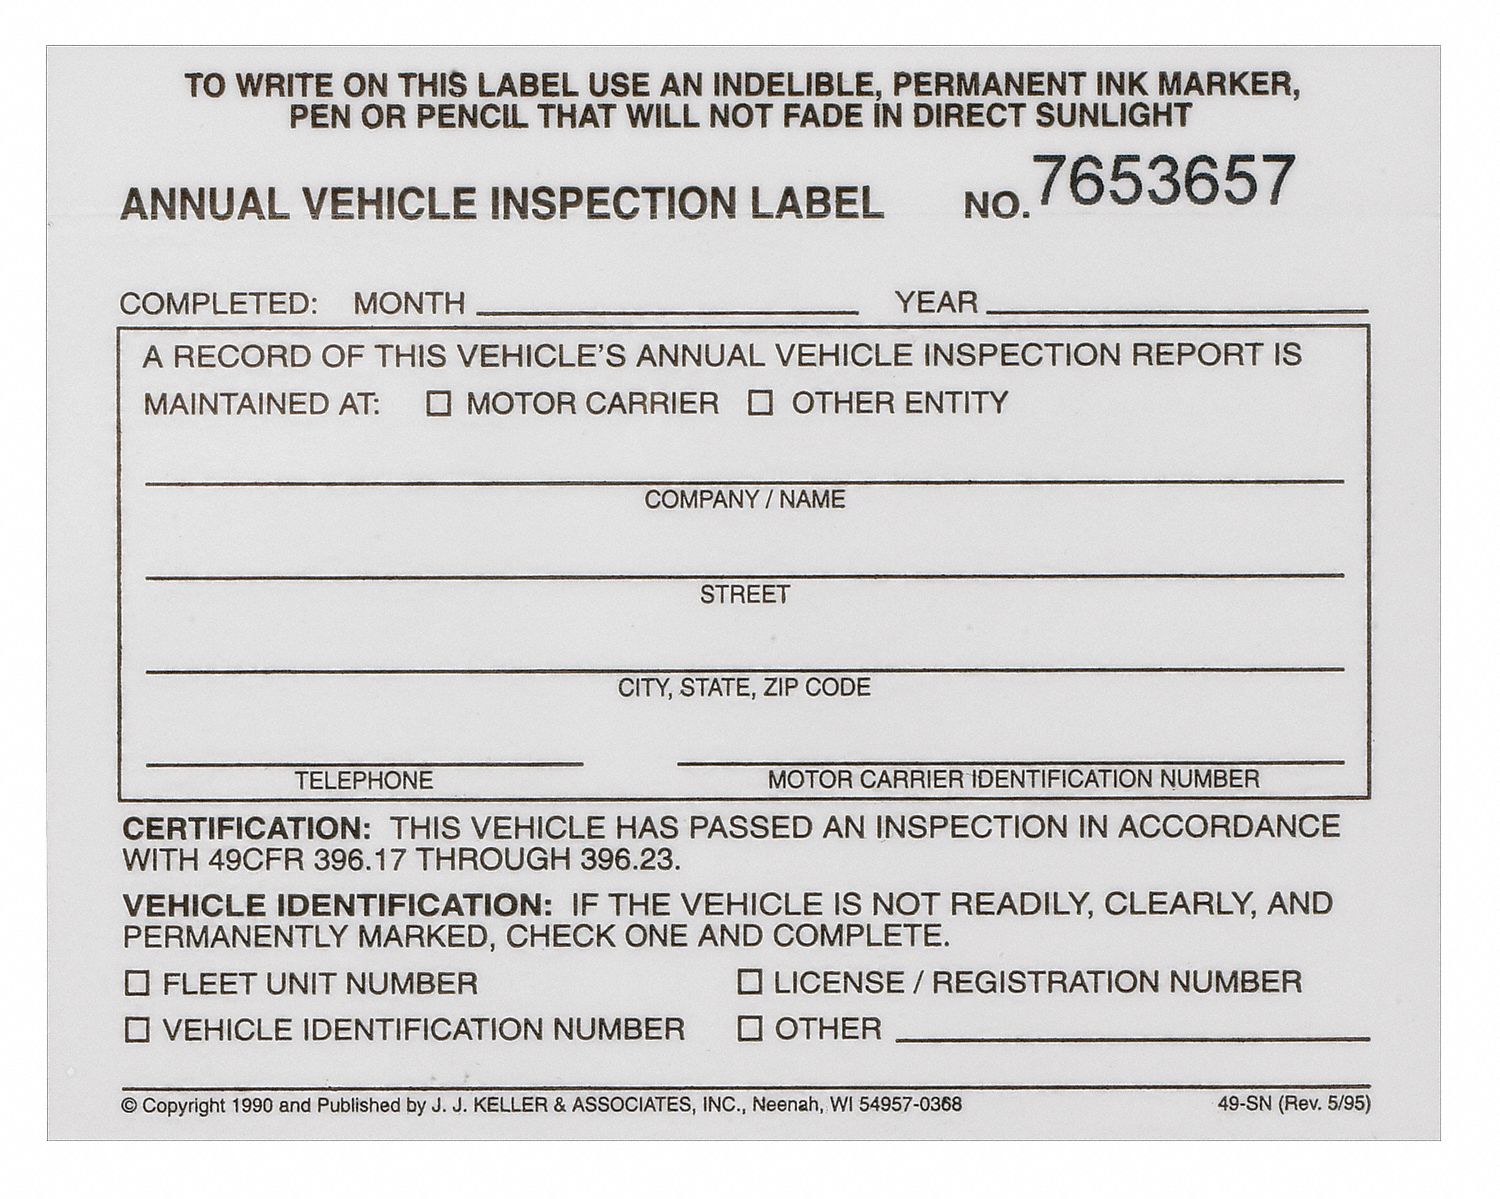 Vinyl w/Mylar Laminate 20 Annual Vehicle Inspection Label 